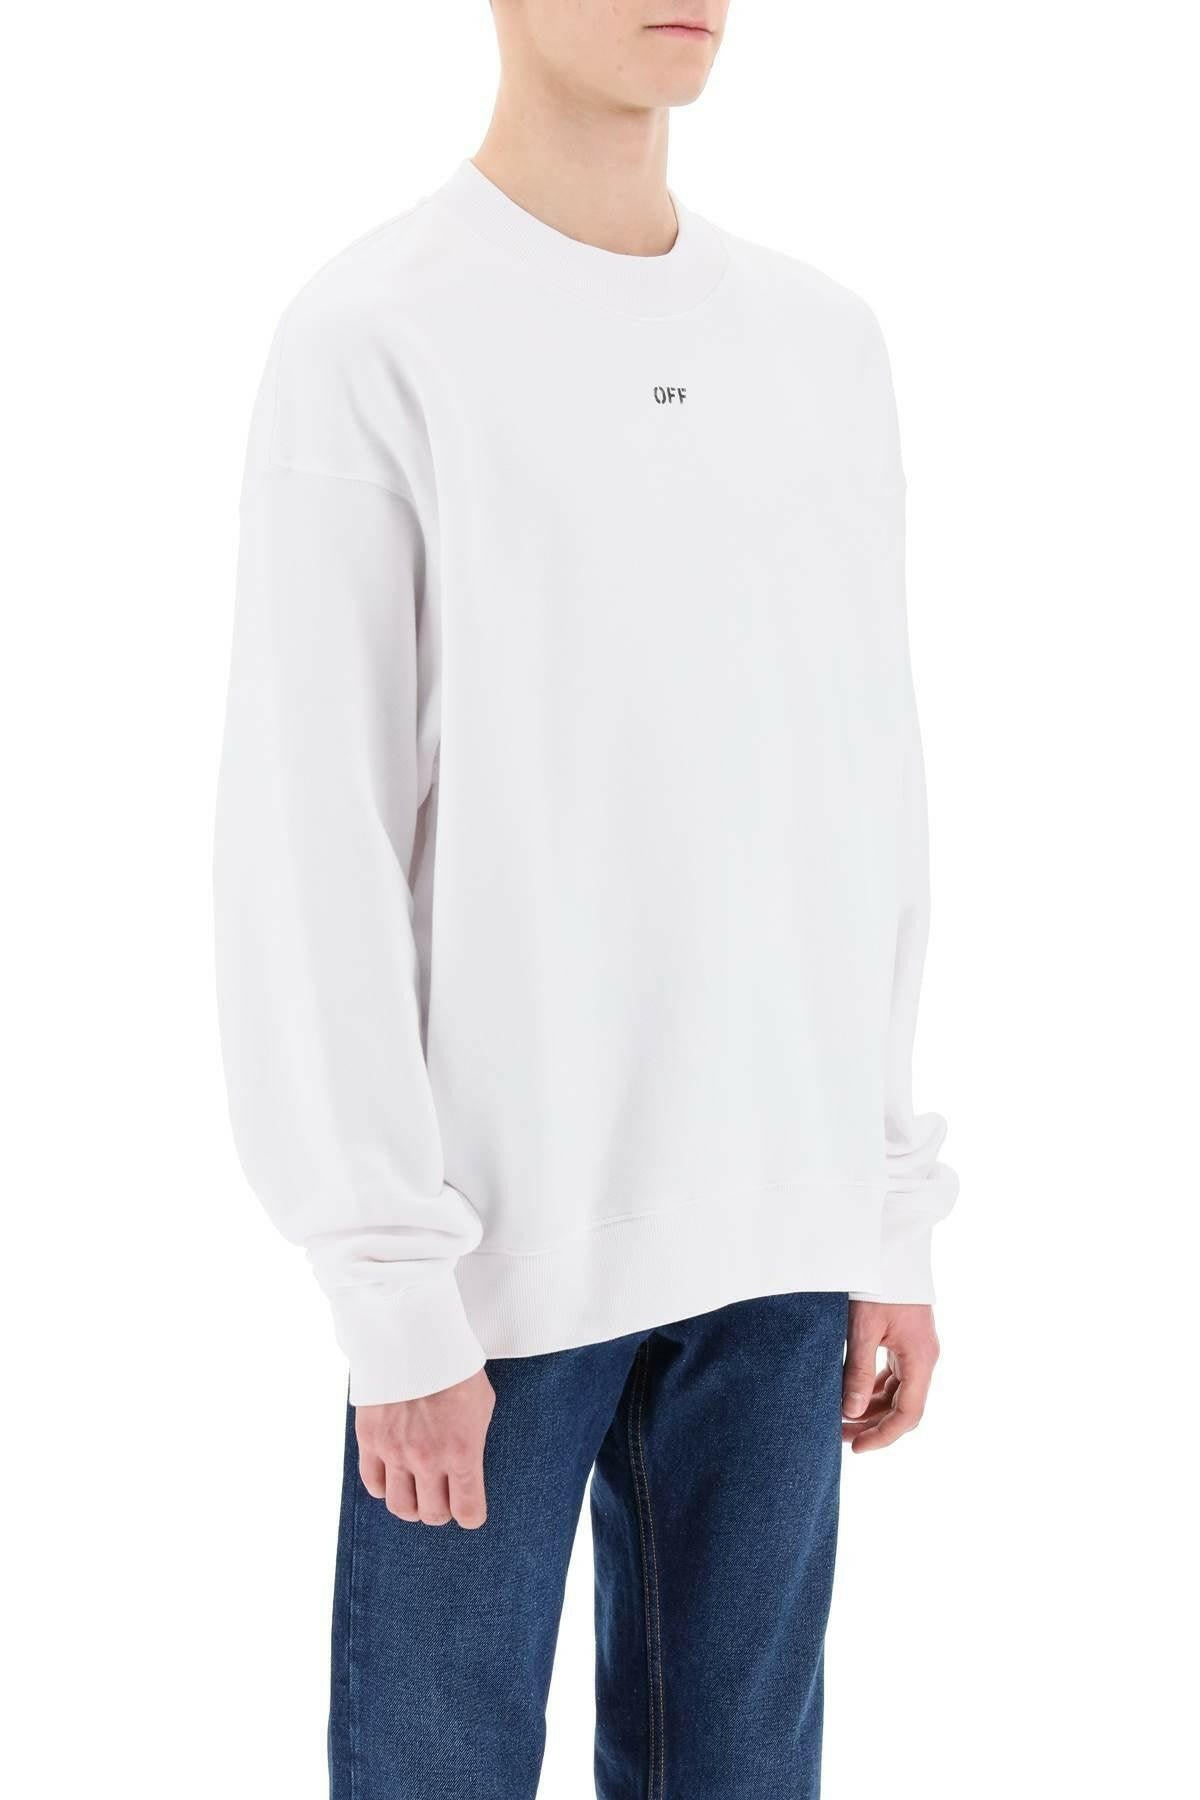 Off White Skate Sweatshirt With Off Logo - JOHN JULIA